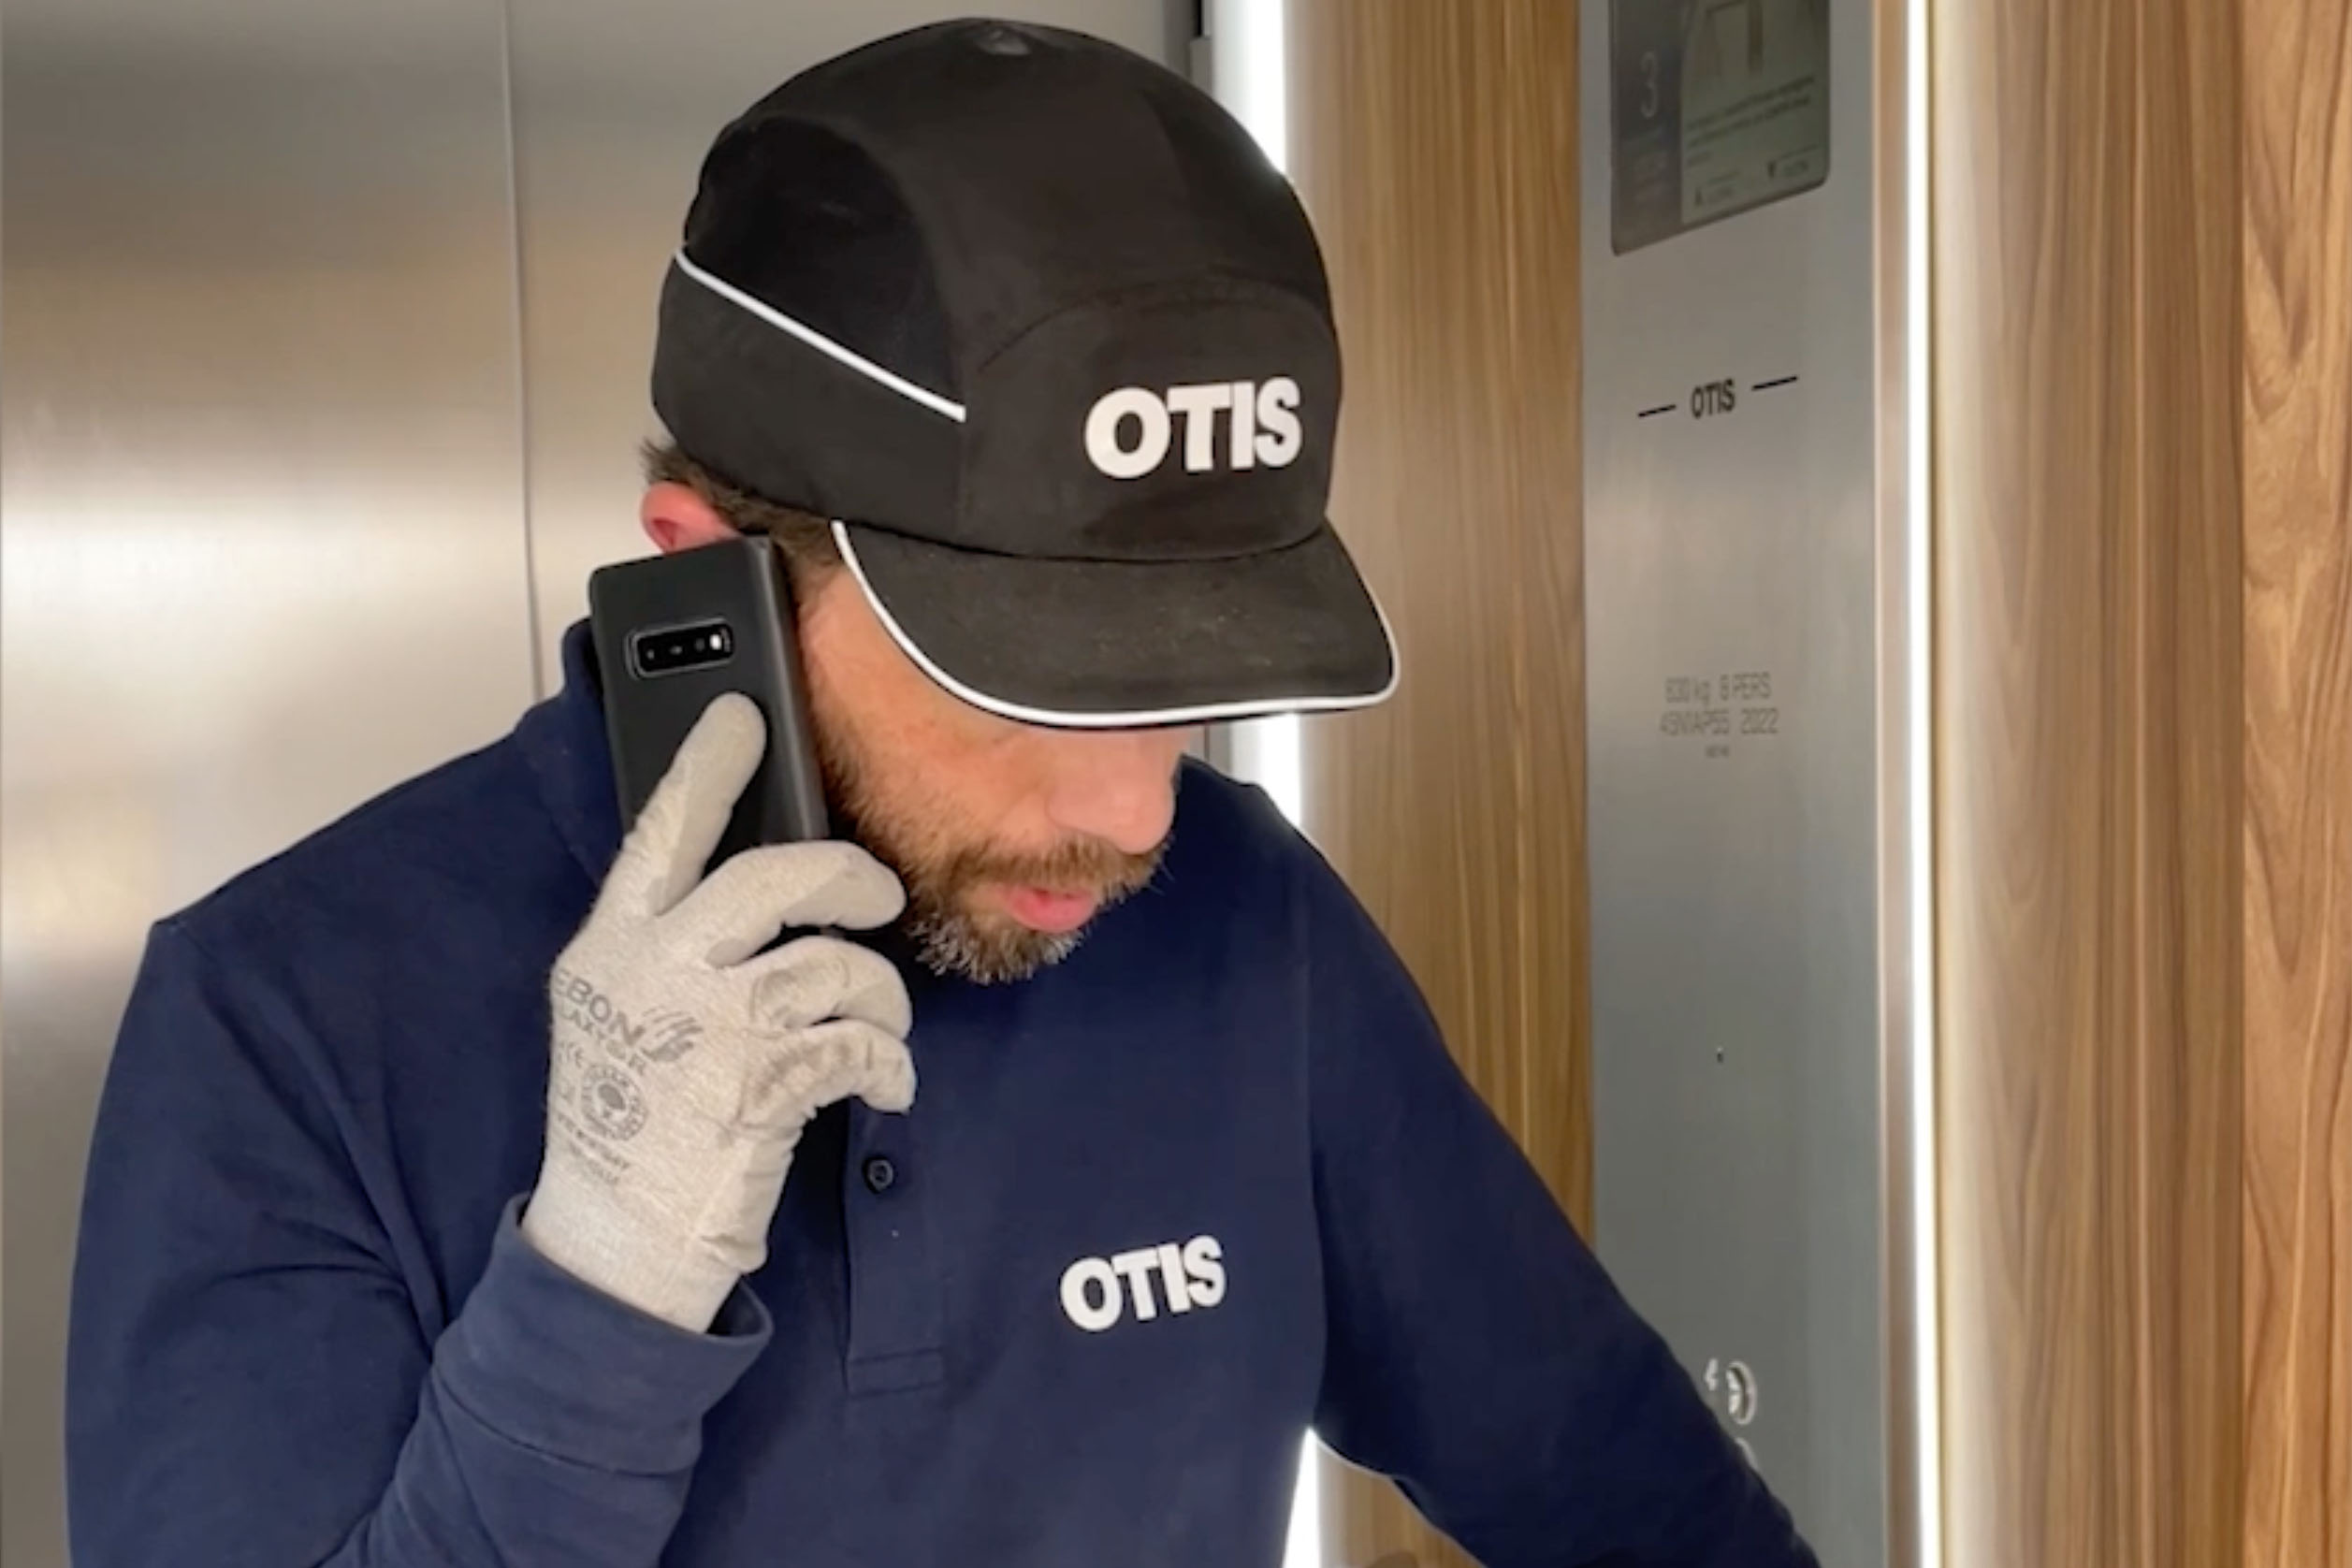 Otis employee Franck on mobile phone inside an elevator